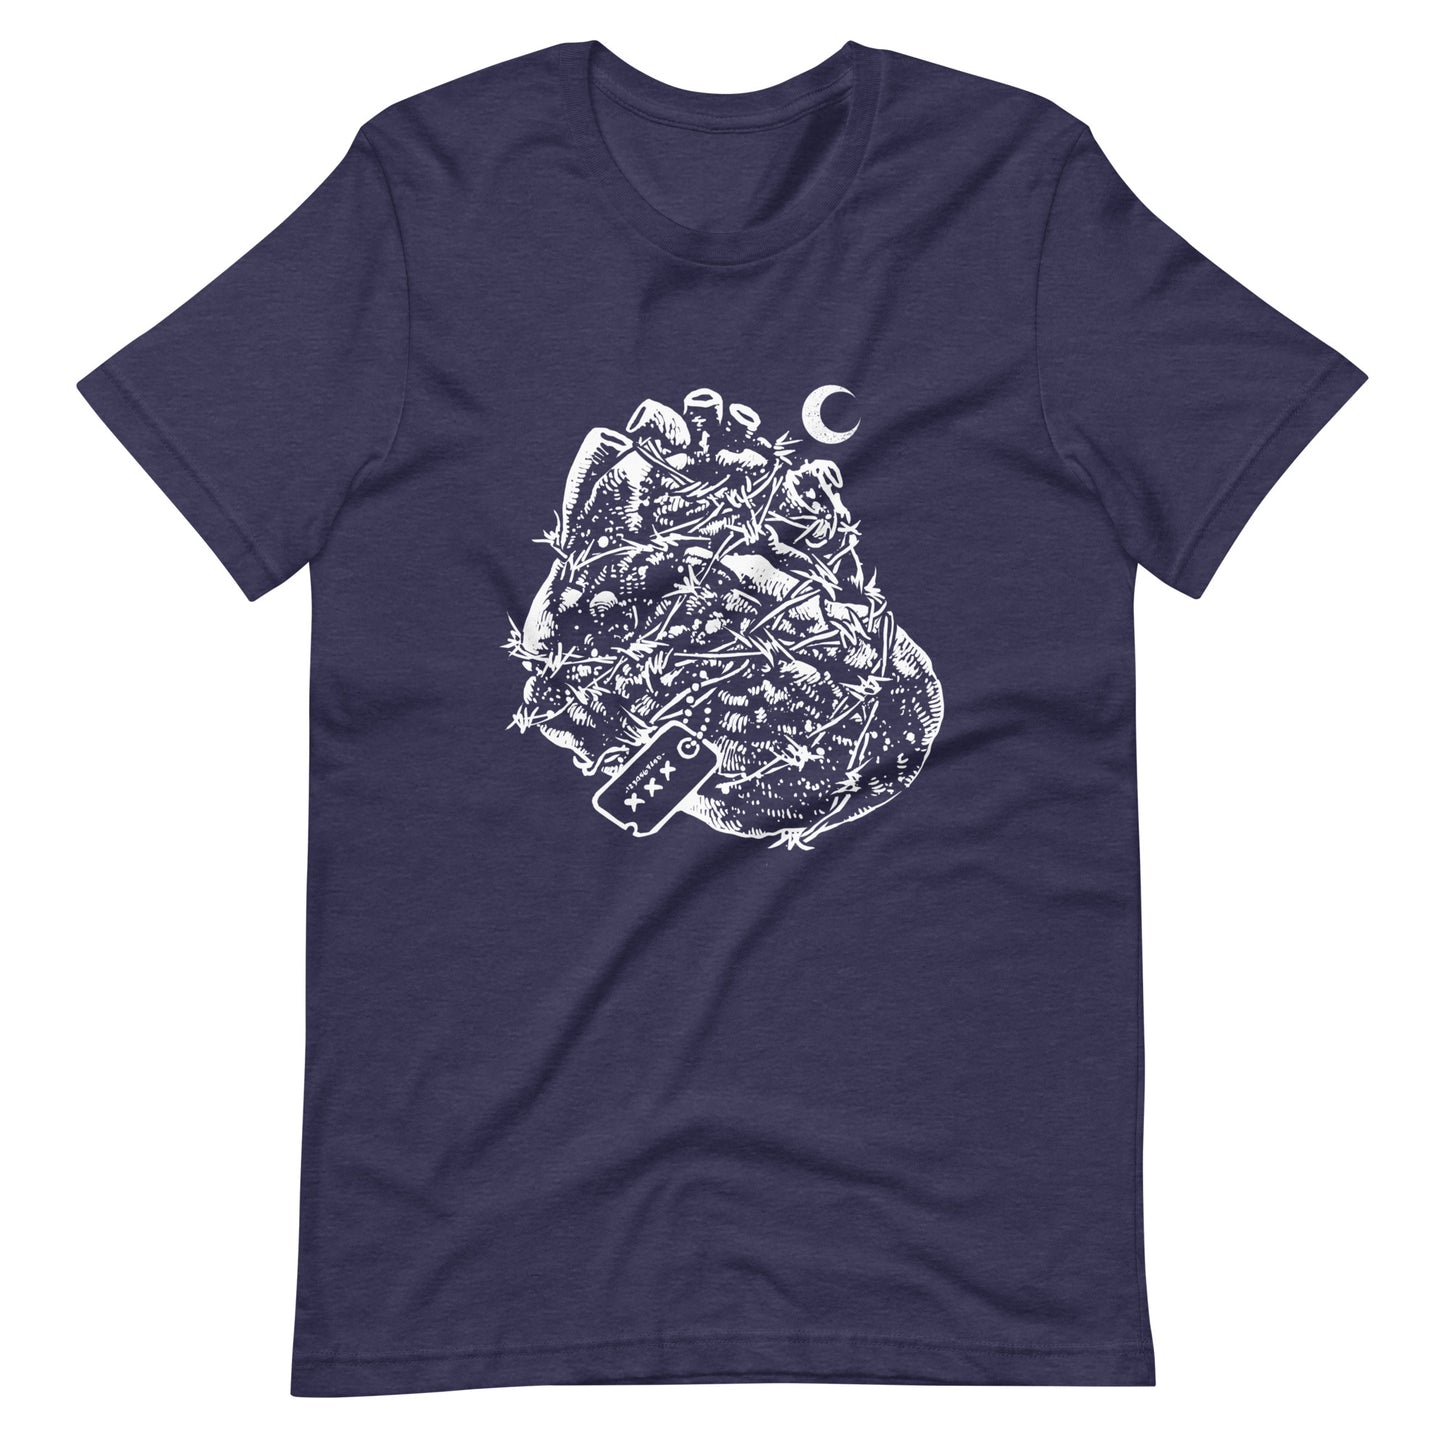 Heart Heroes - Men's t-shirt - Heather Midnight Navy Front